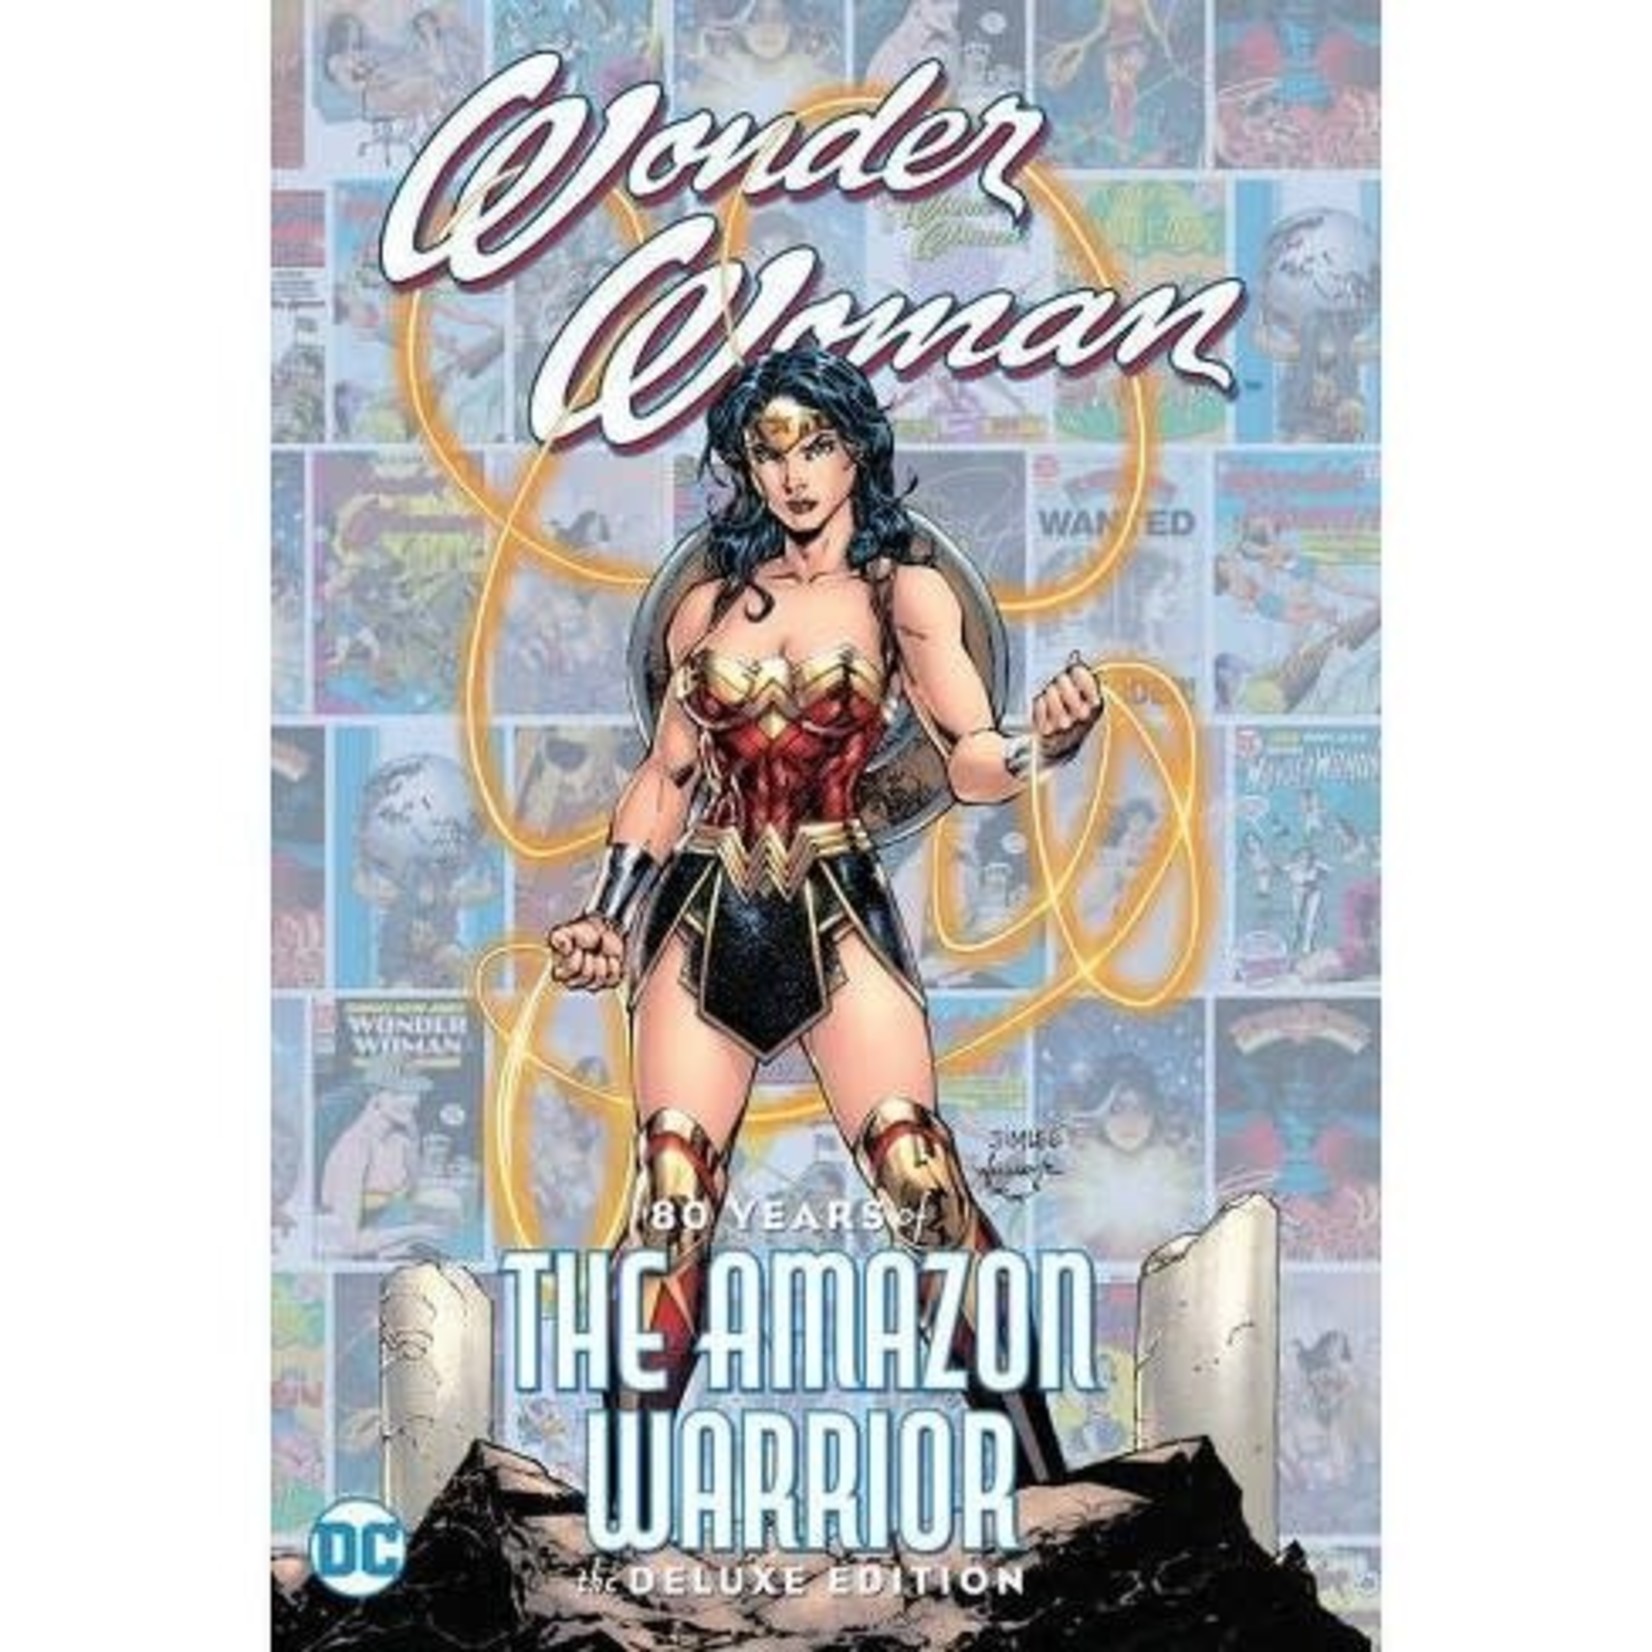 DCU Wonder Woman 80 Years of the Amazon Warrior Deluxe